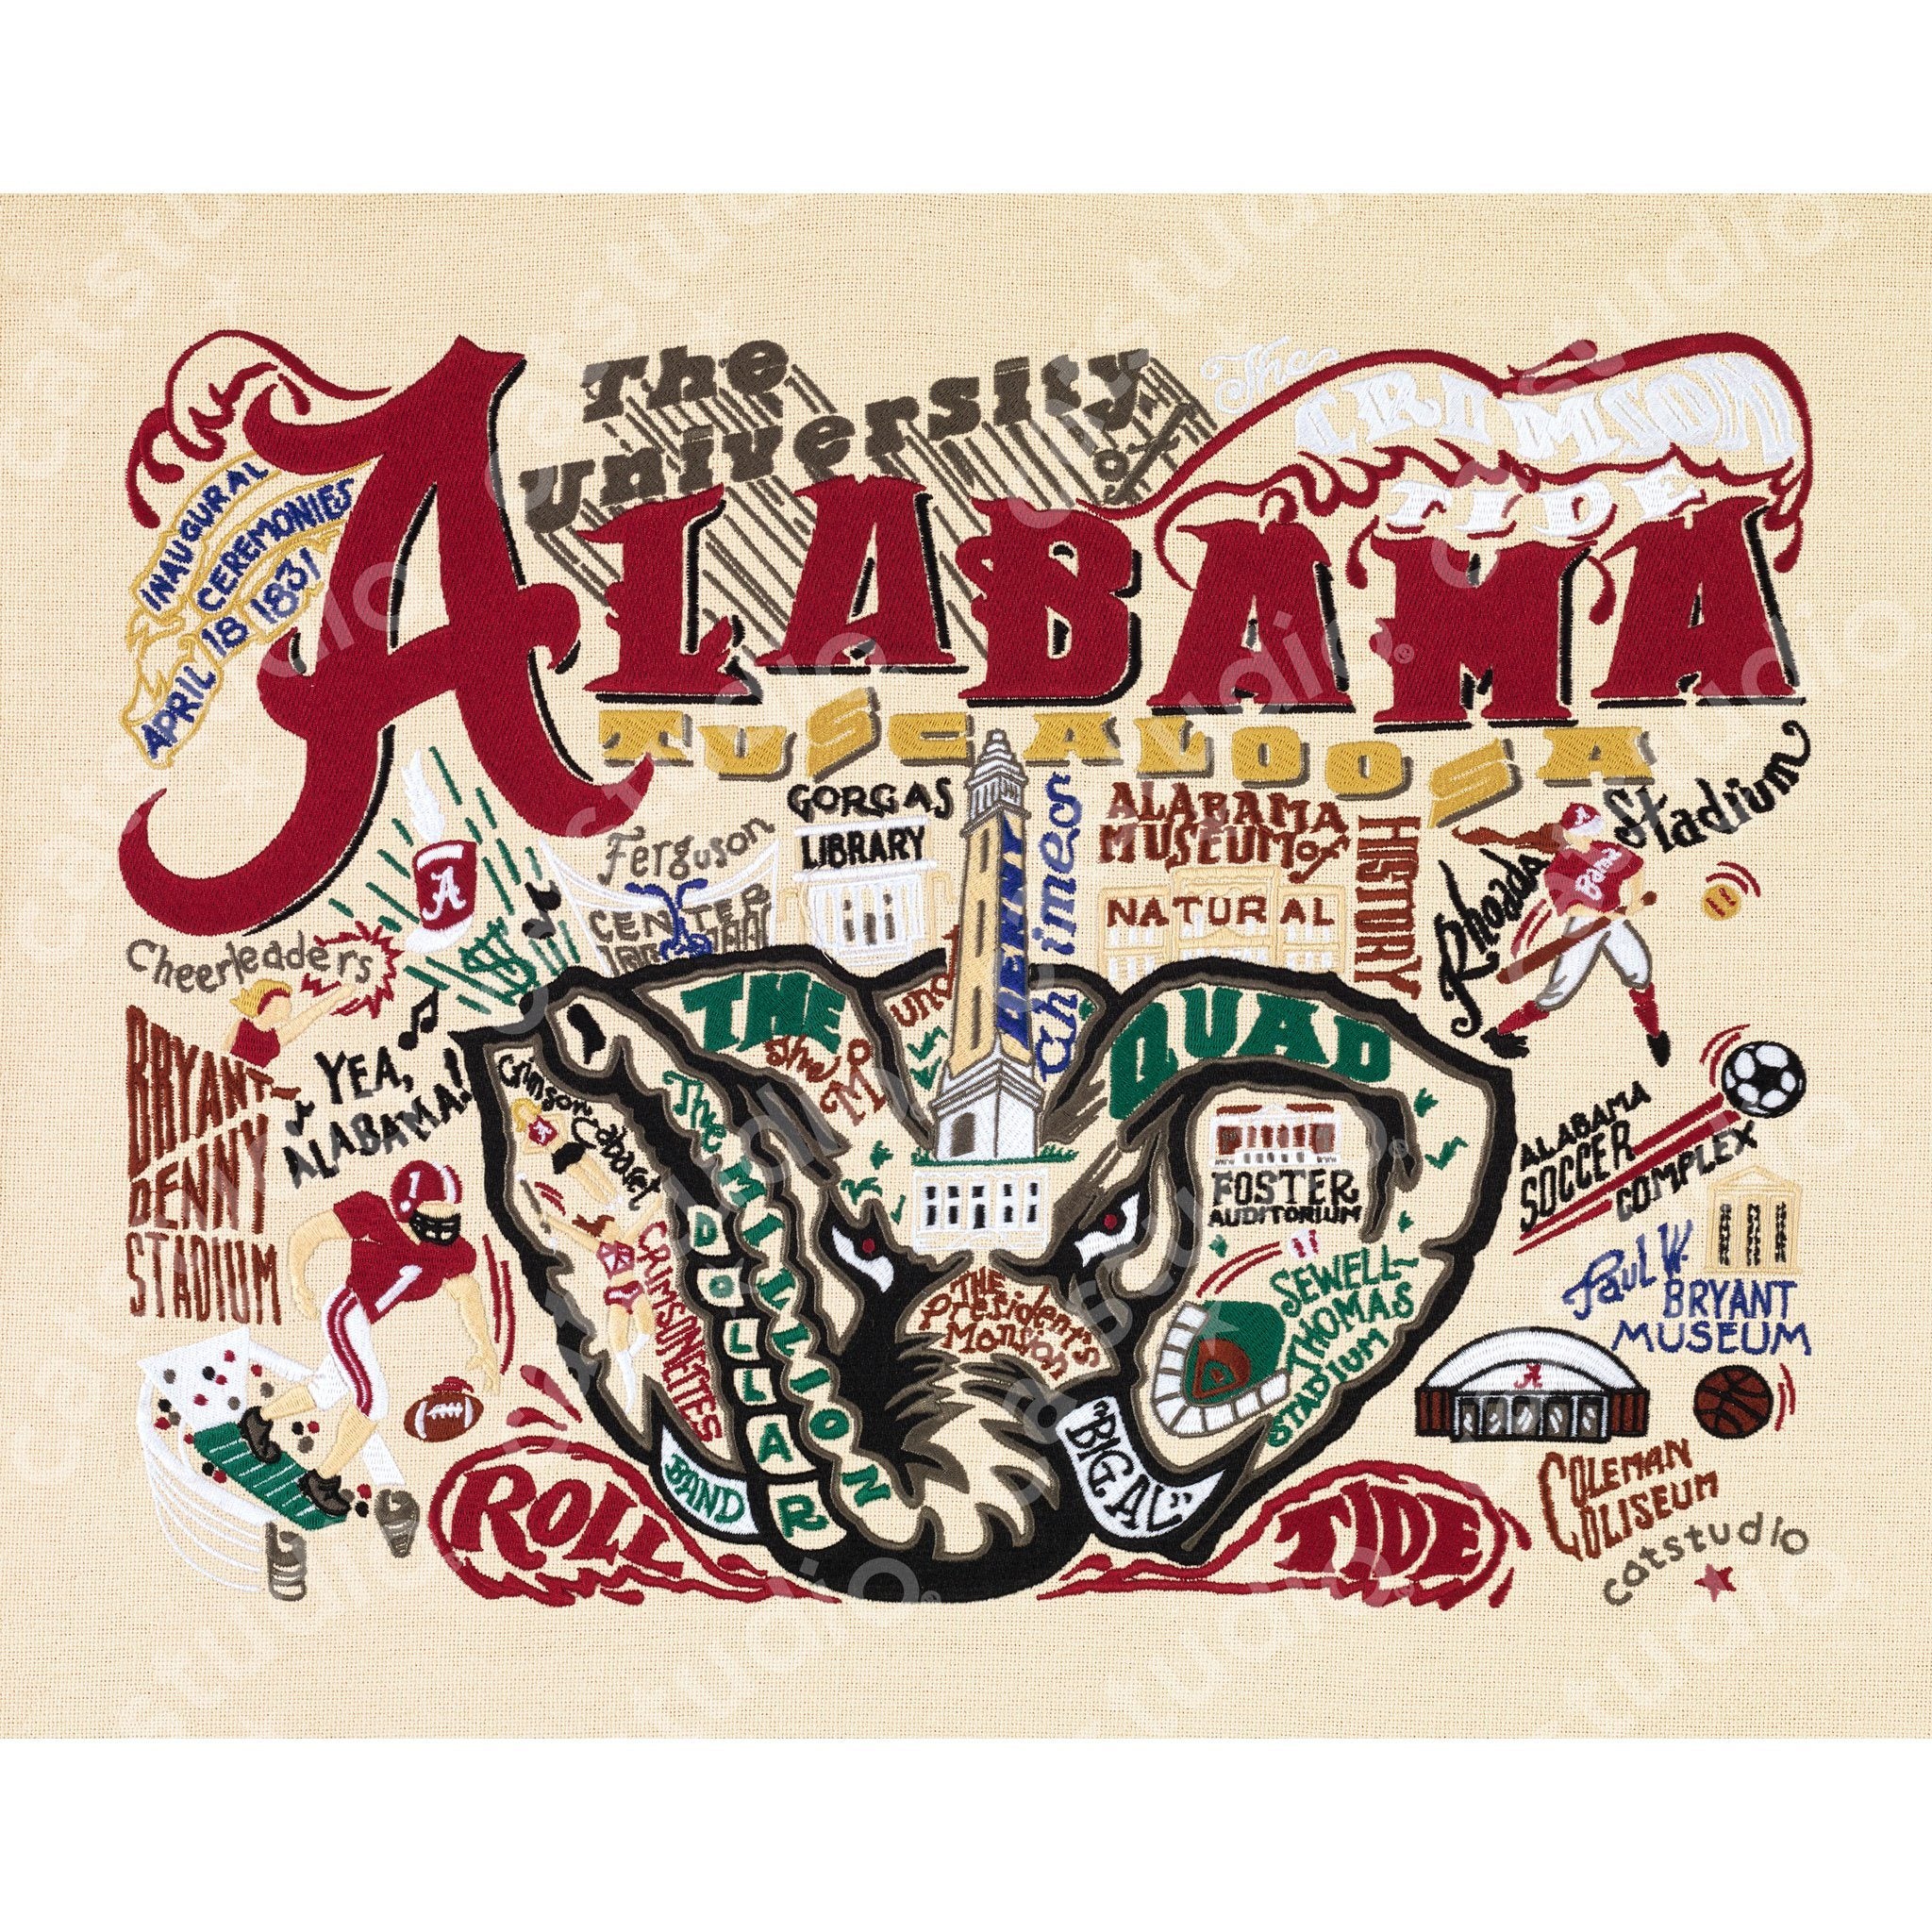 The Art of Alabama